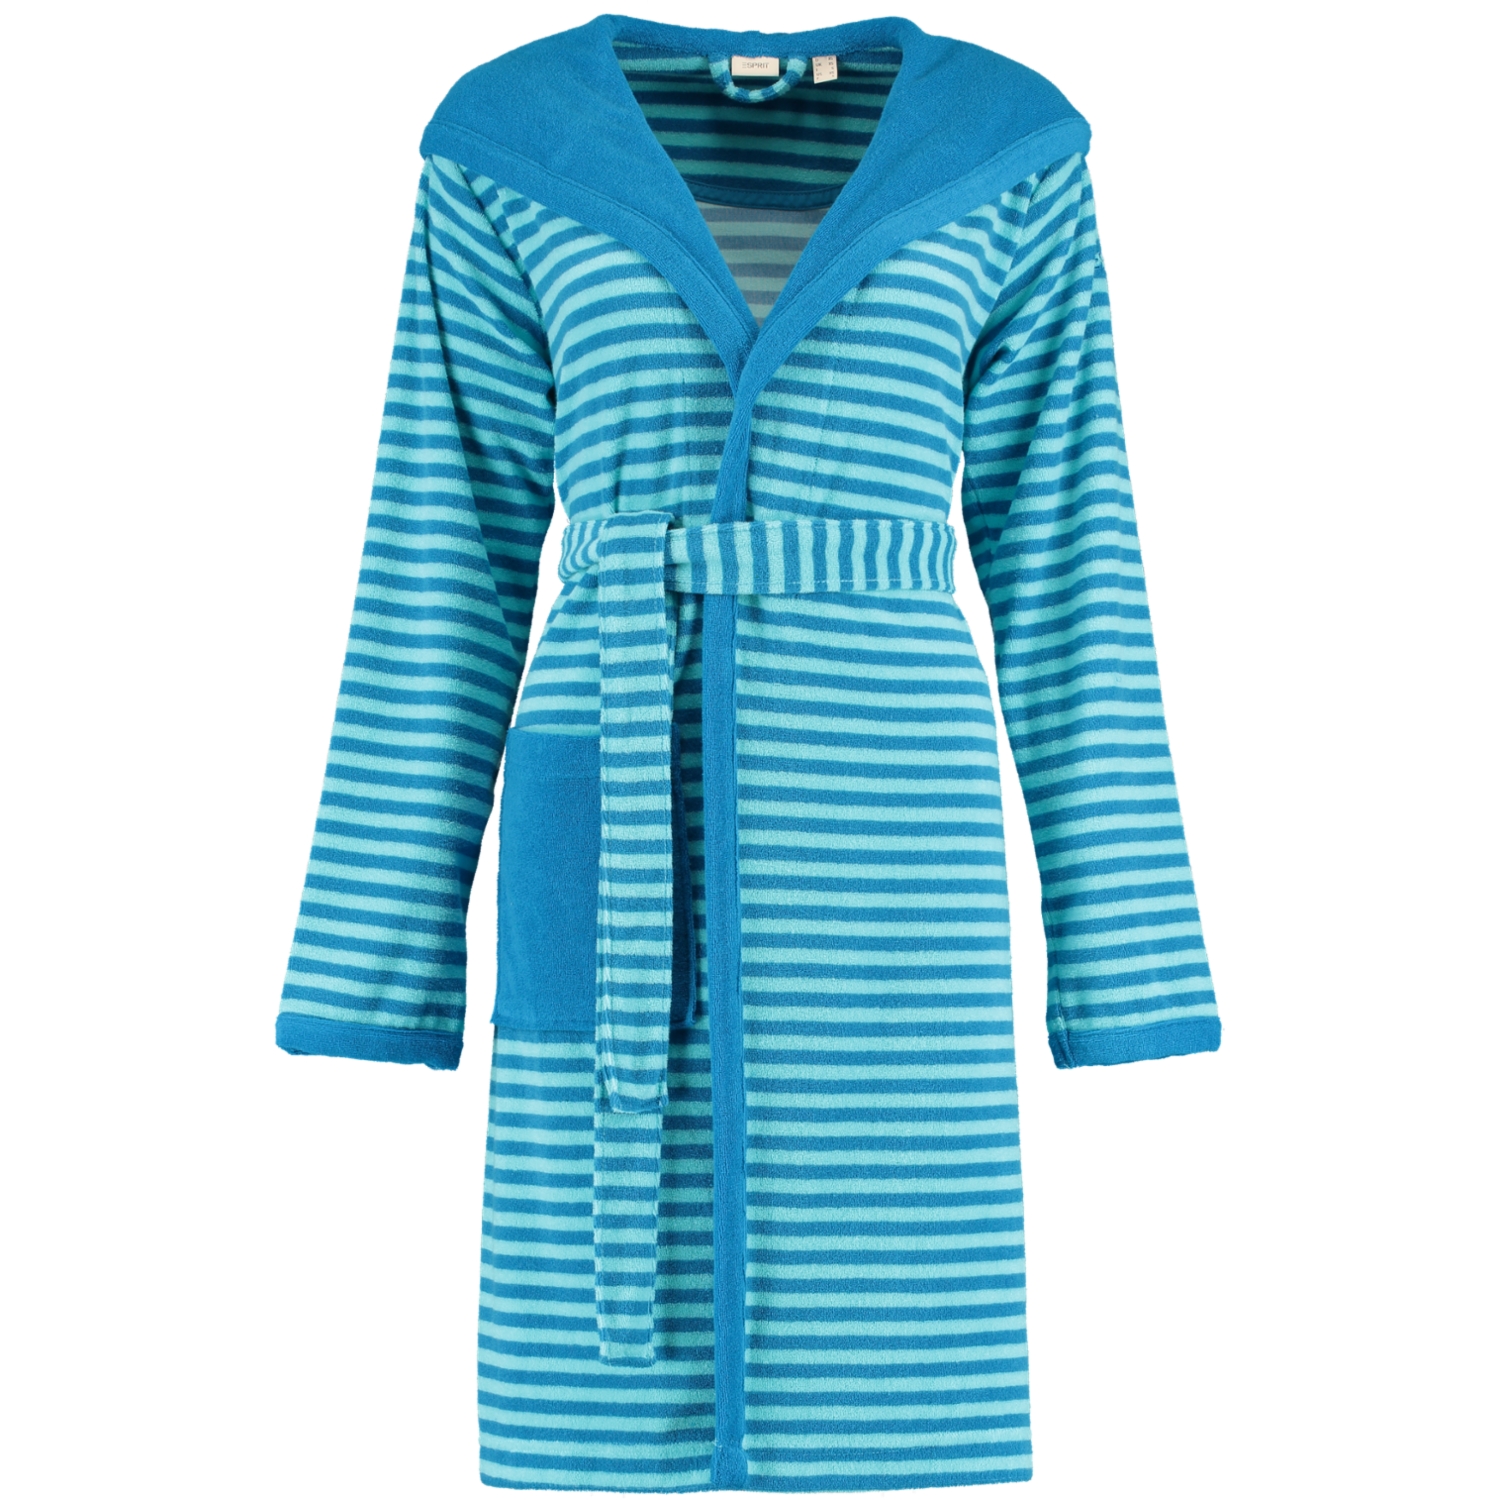 Esprit Damen Bademantel Striped Hoody Kapuze - Farbe: turquoise - 002 |  Damen | Bademantel